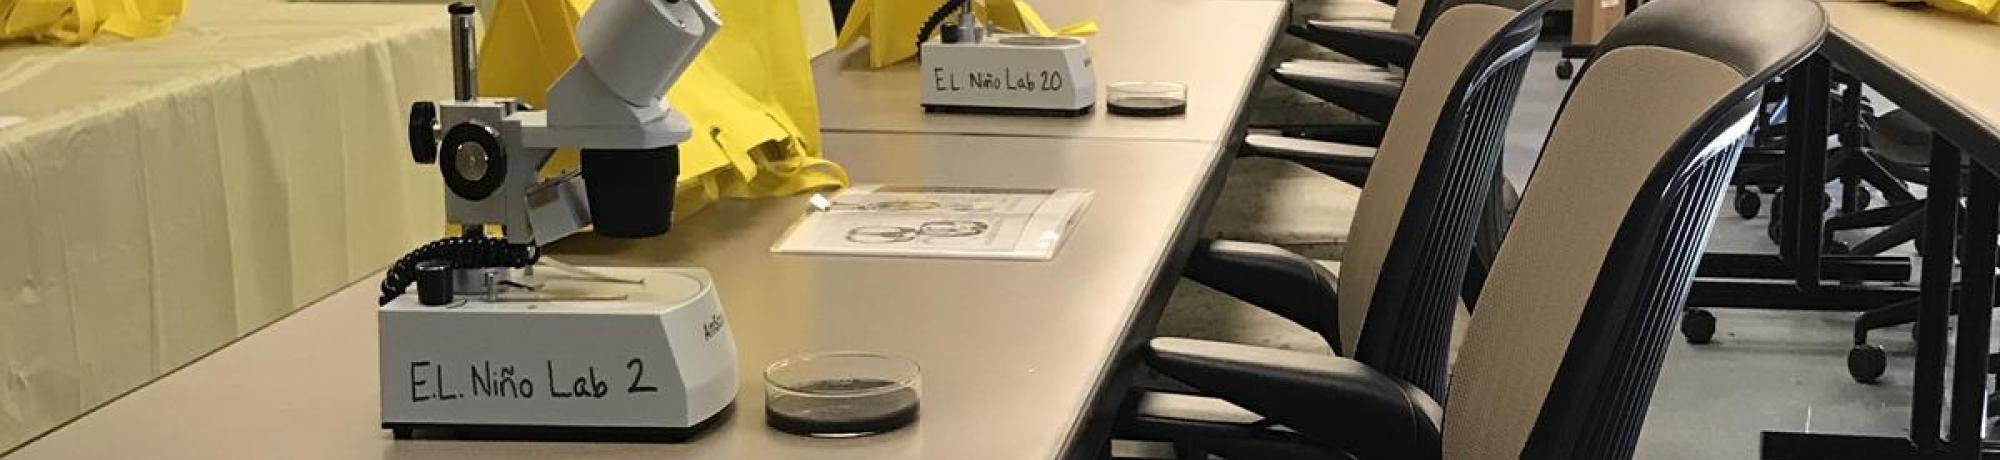 E.L. Niño Lab classroom with microscopes on tables